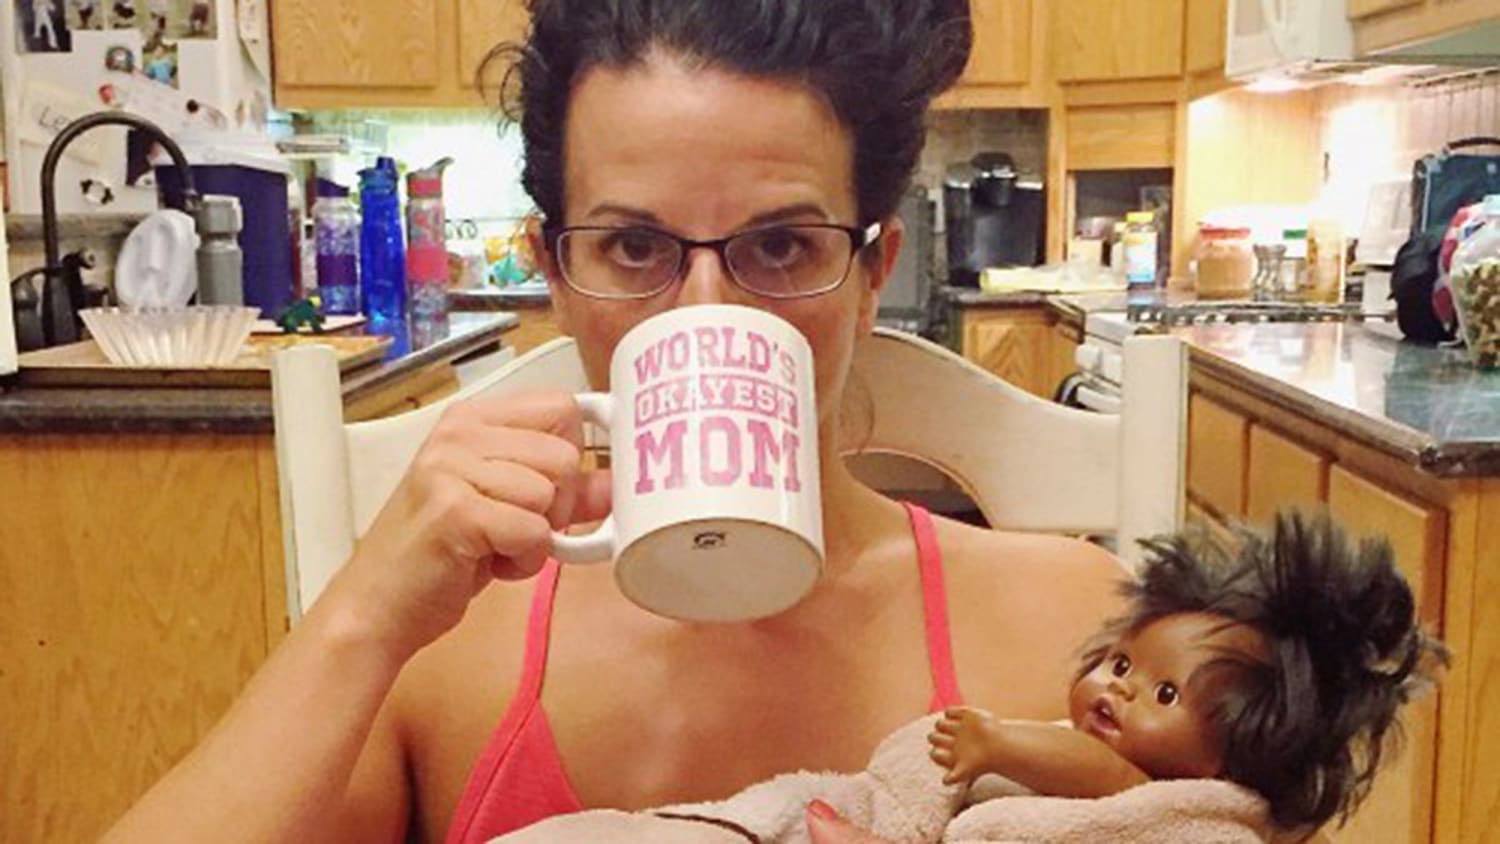 14 real 'Bad Moms' confess funny, hilarious parent fails